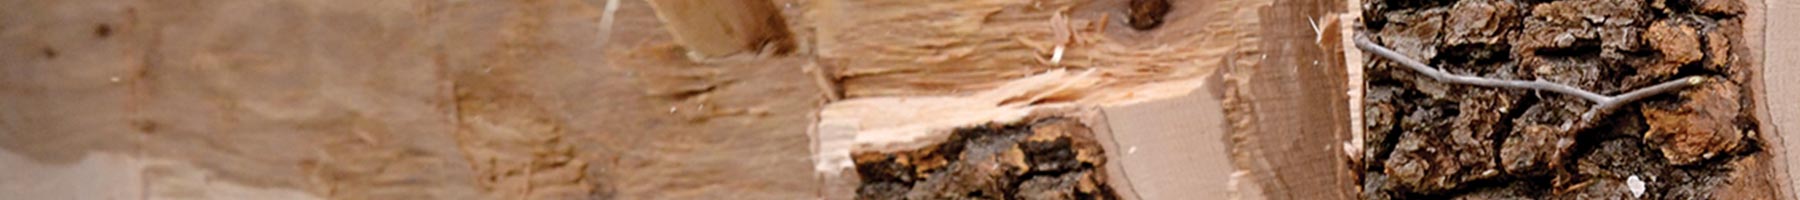 a chopped log